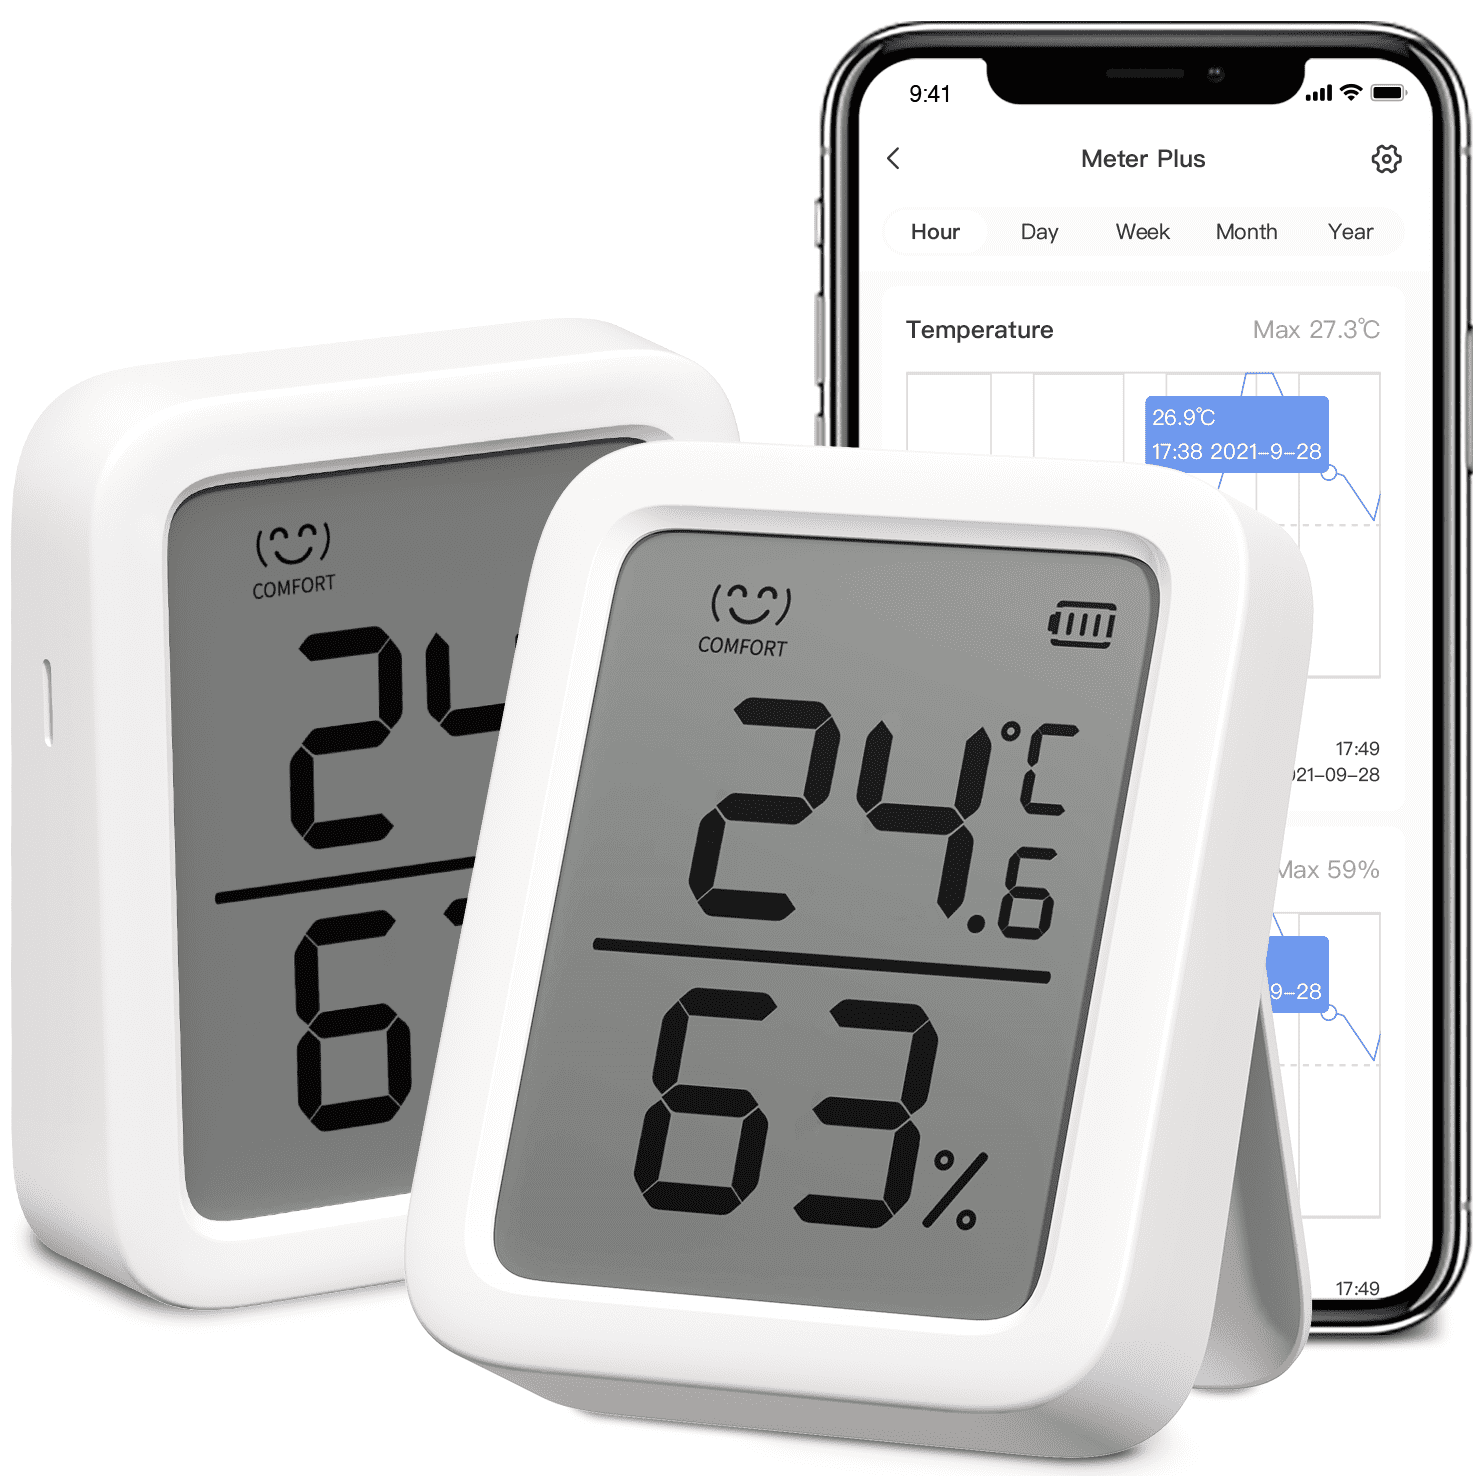 Handy temperature sensor: SwitchBot Thermo-Hygrometer - Matter & Apple  HomeKit Blog